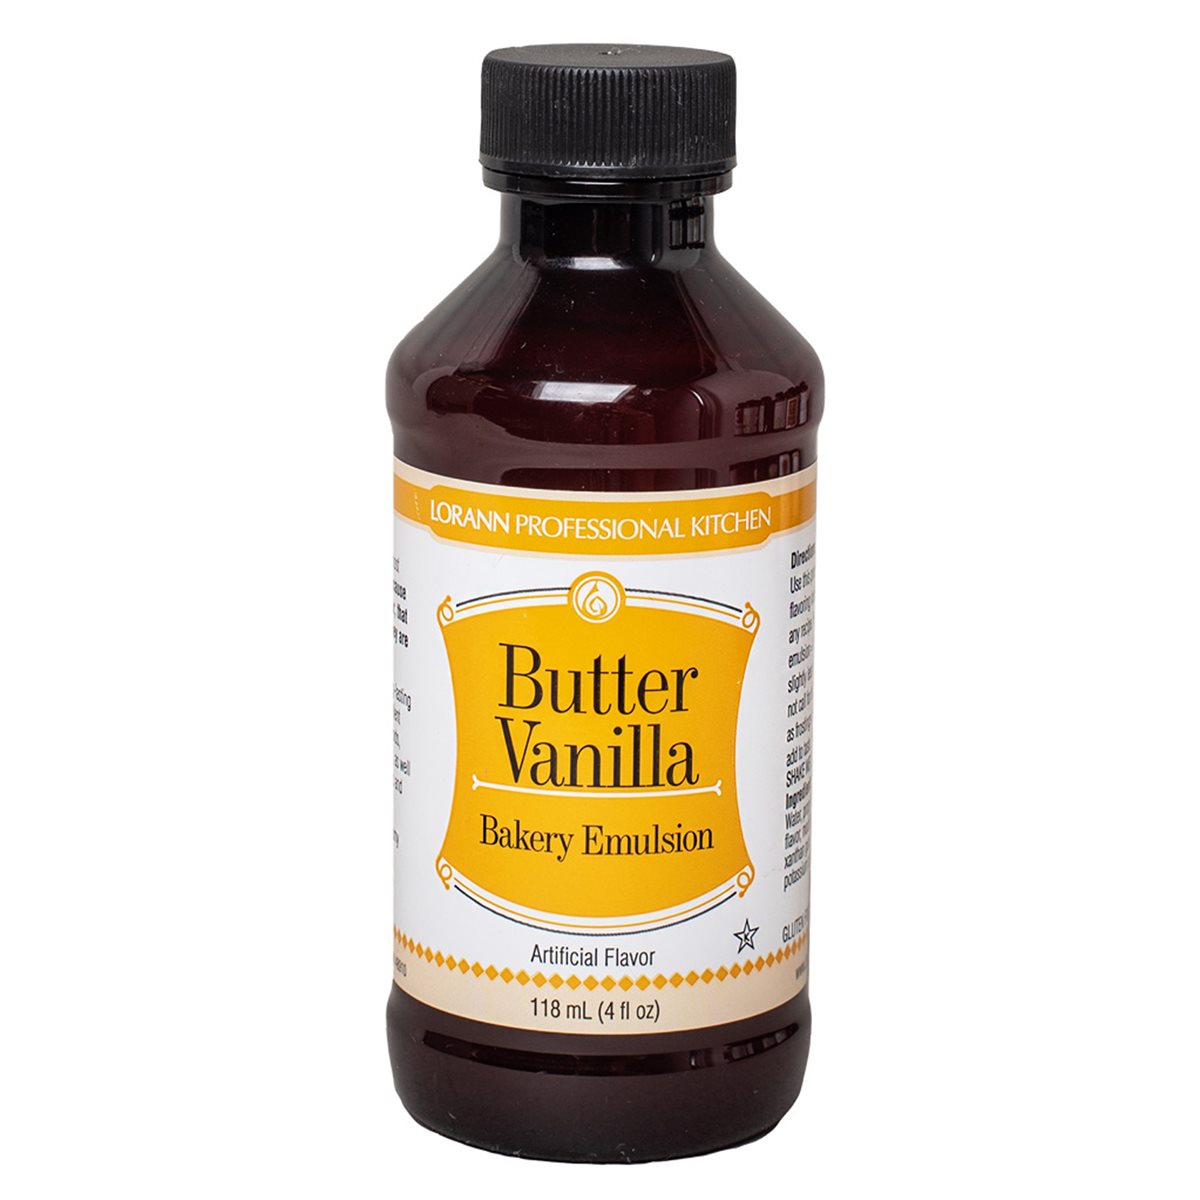 Se Lorann Bakery Emulsion - Butter Vanilla 118 ml hos BageTid.dk